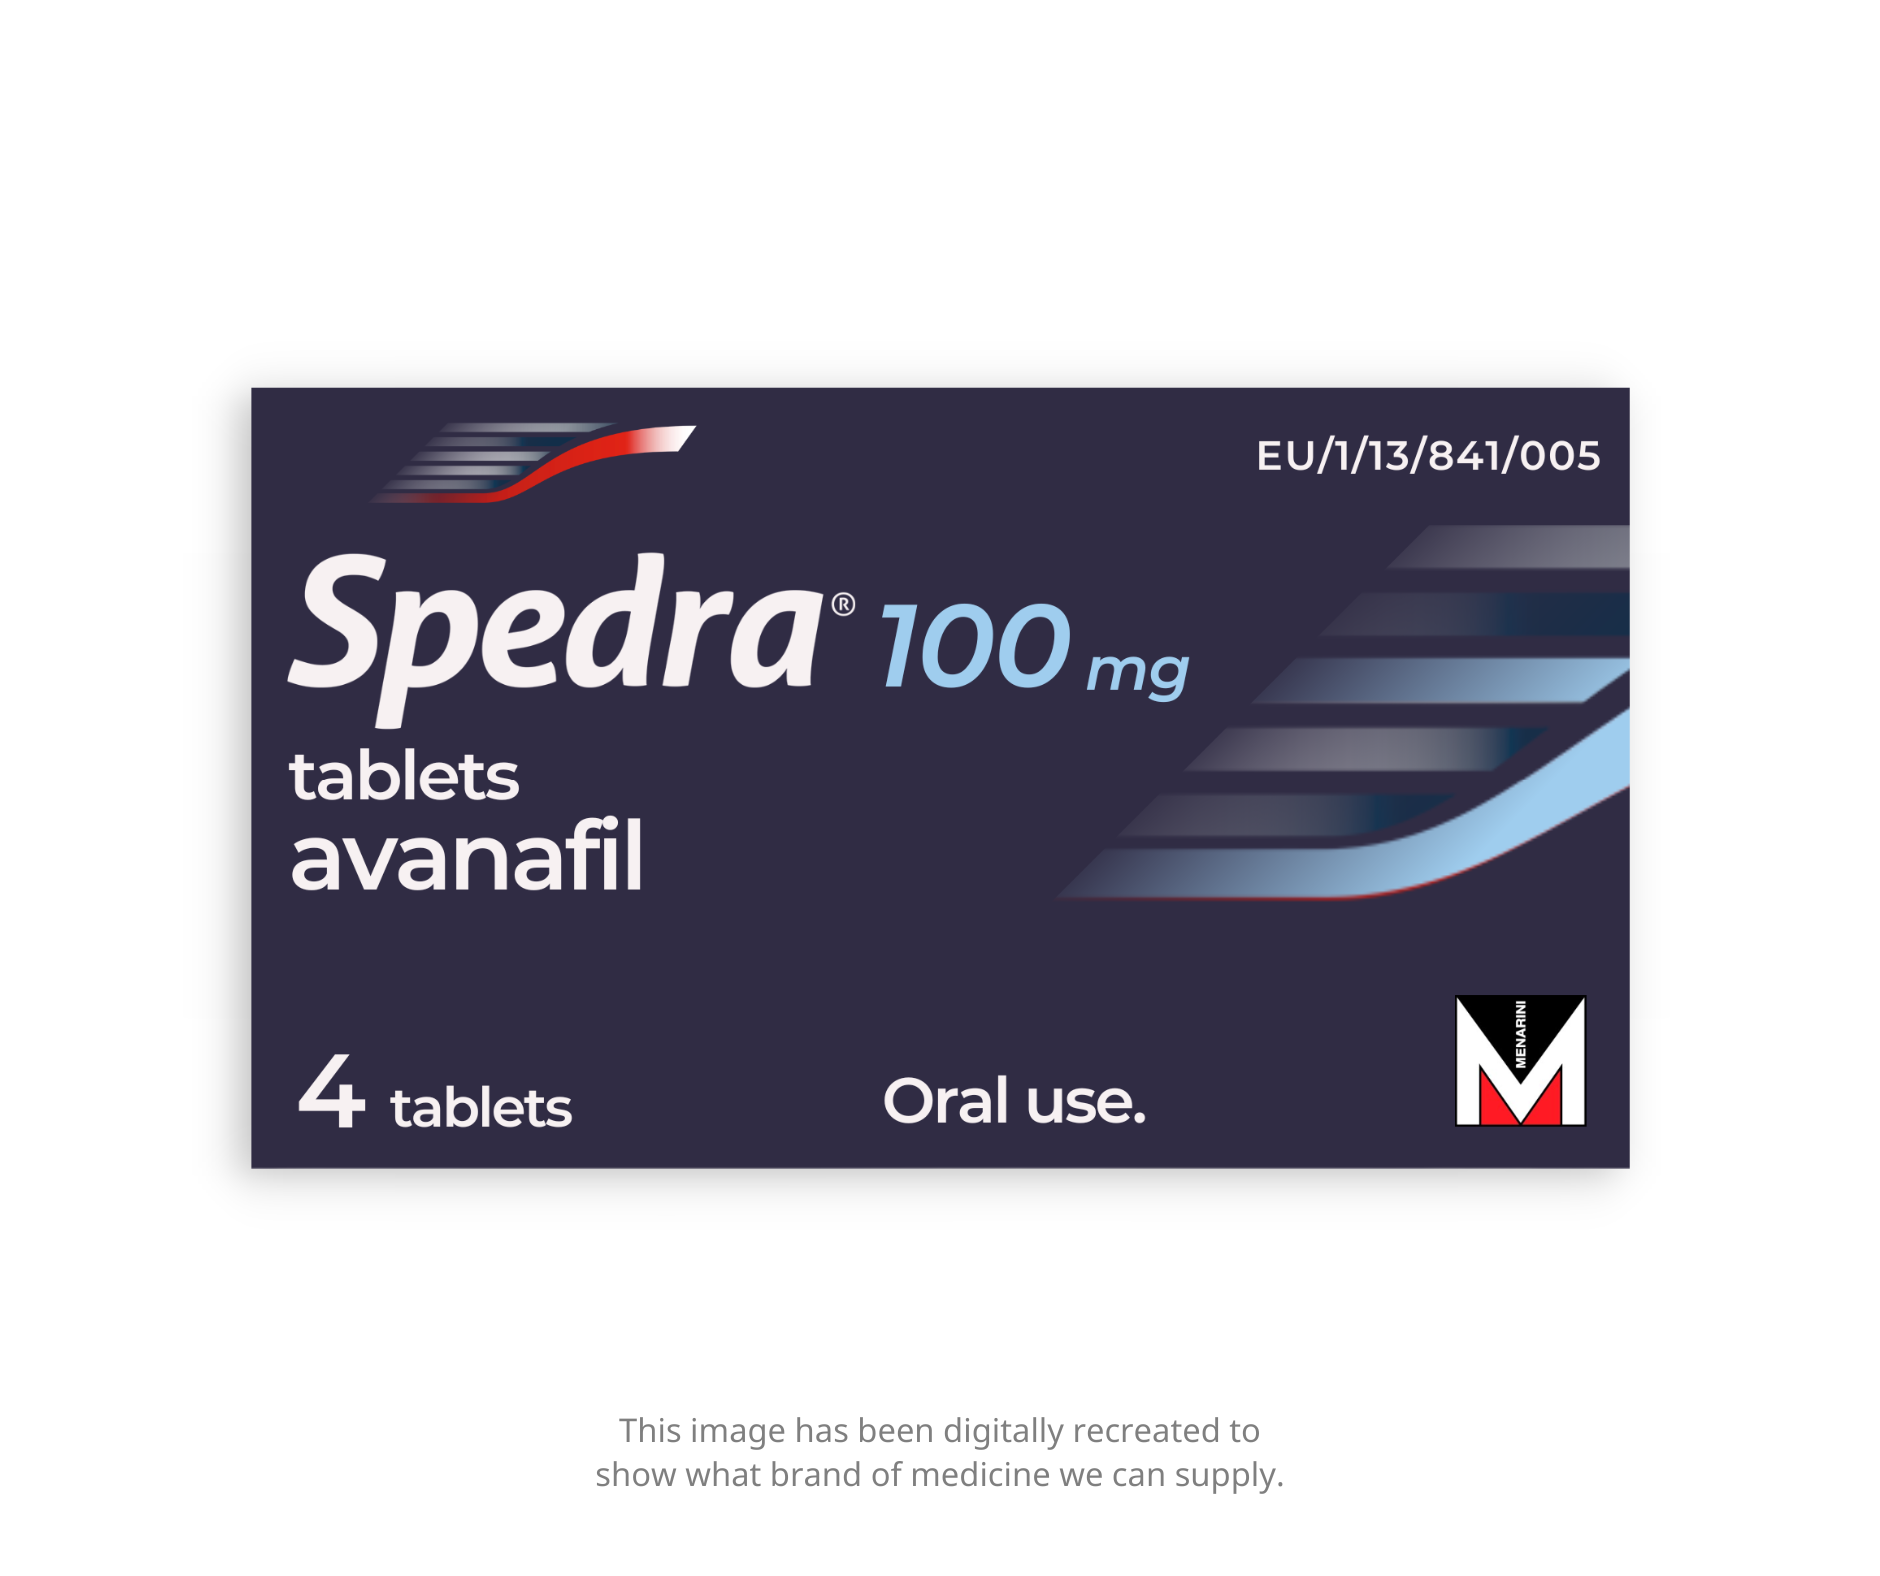 Spedra Avanafil 100mg example packaging